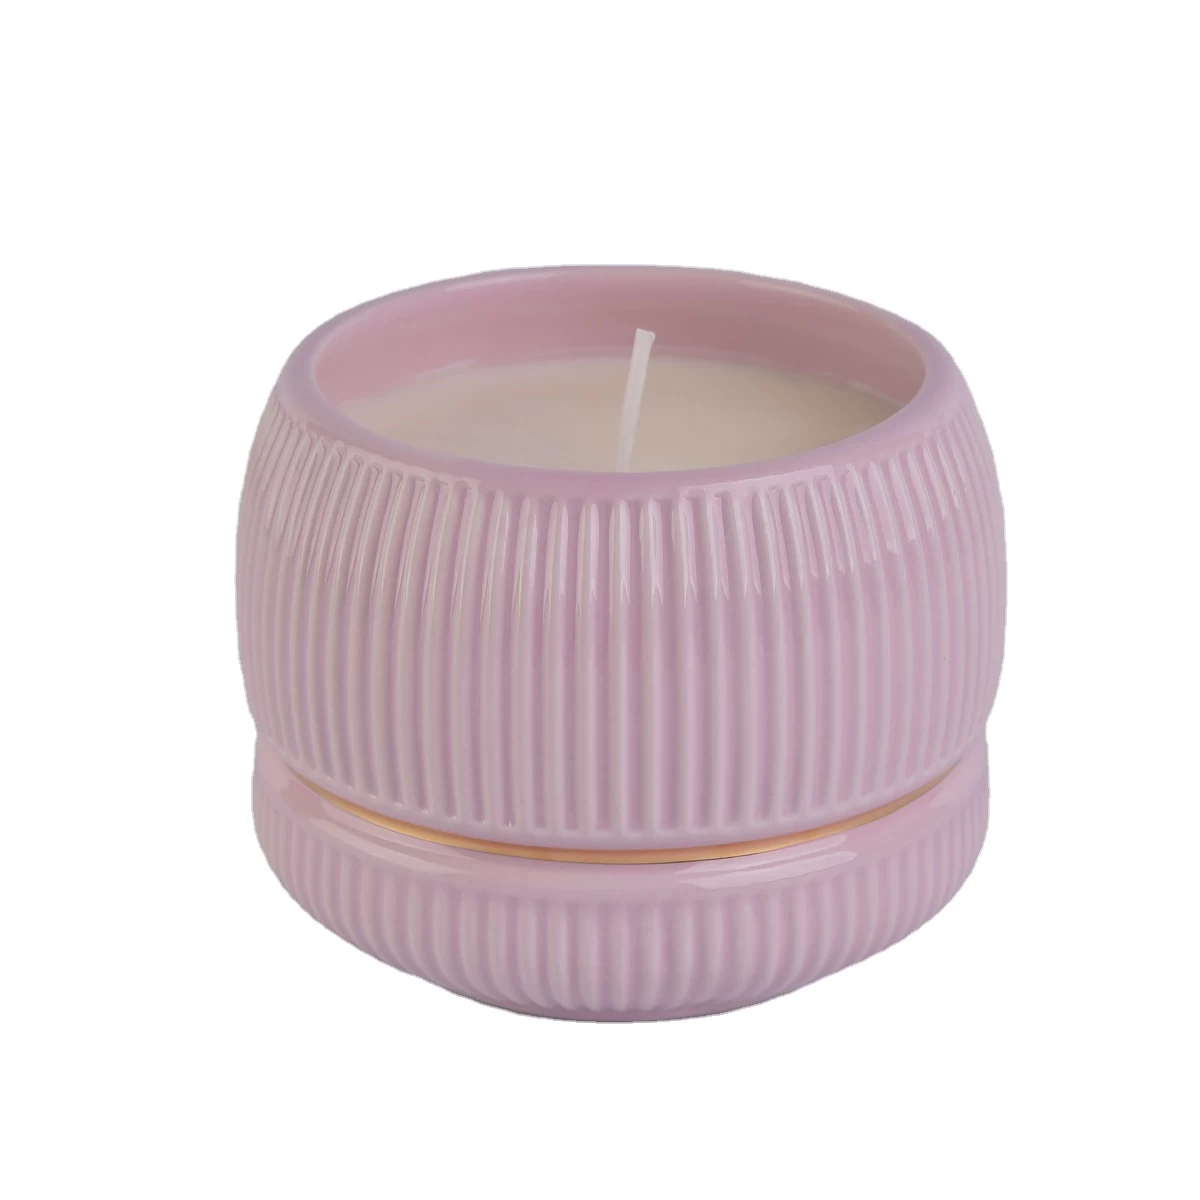 Sunny hot sales pink tea light ceramic candle jars in bulk 10oz